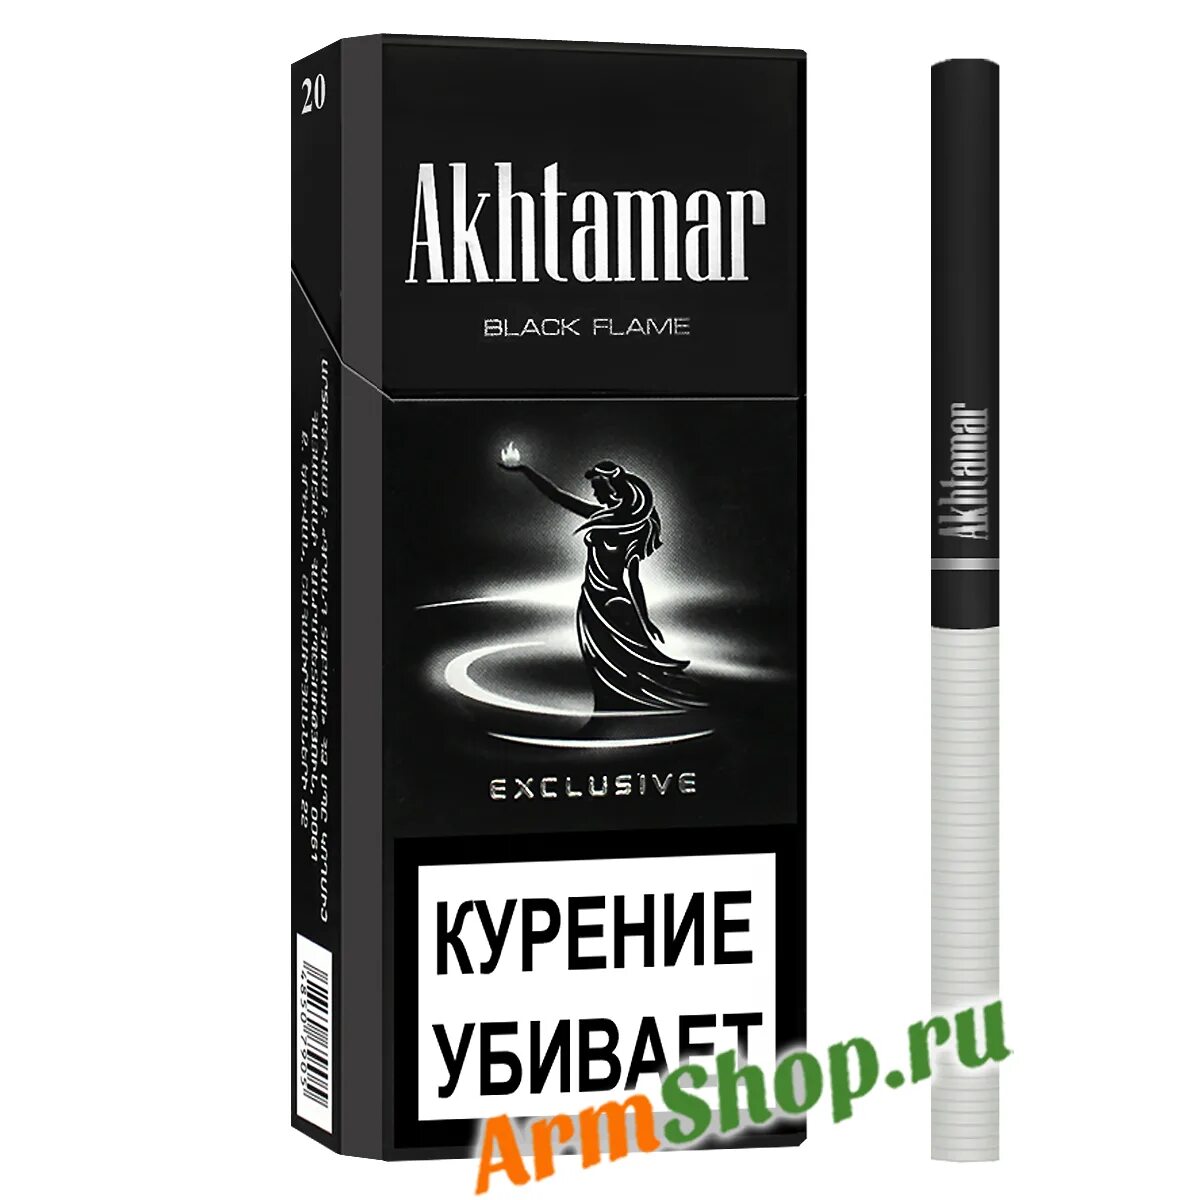 Купить сигареты ахтамар. Сигареты Ахтамар Блэк Флейм. Akhtamar Black Flame Exclusive. Сигареты Ахтамар черные. Ахтамар БЛЕИГ сигареты.